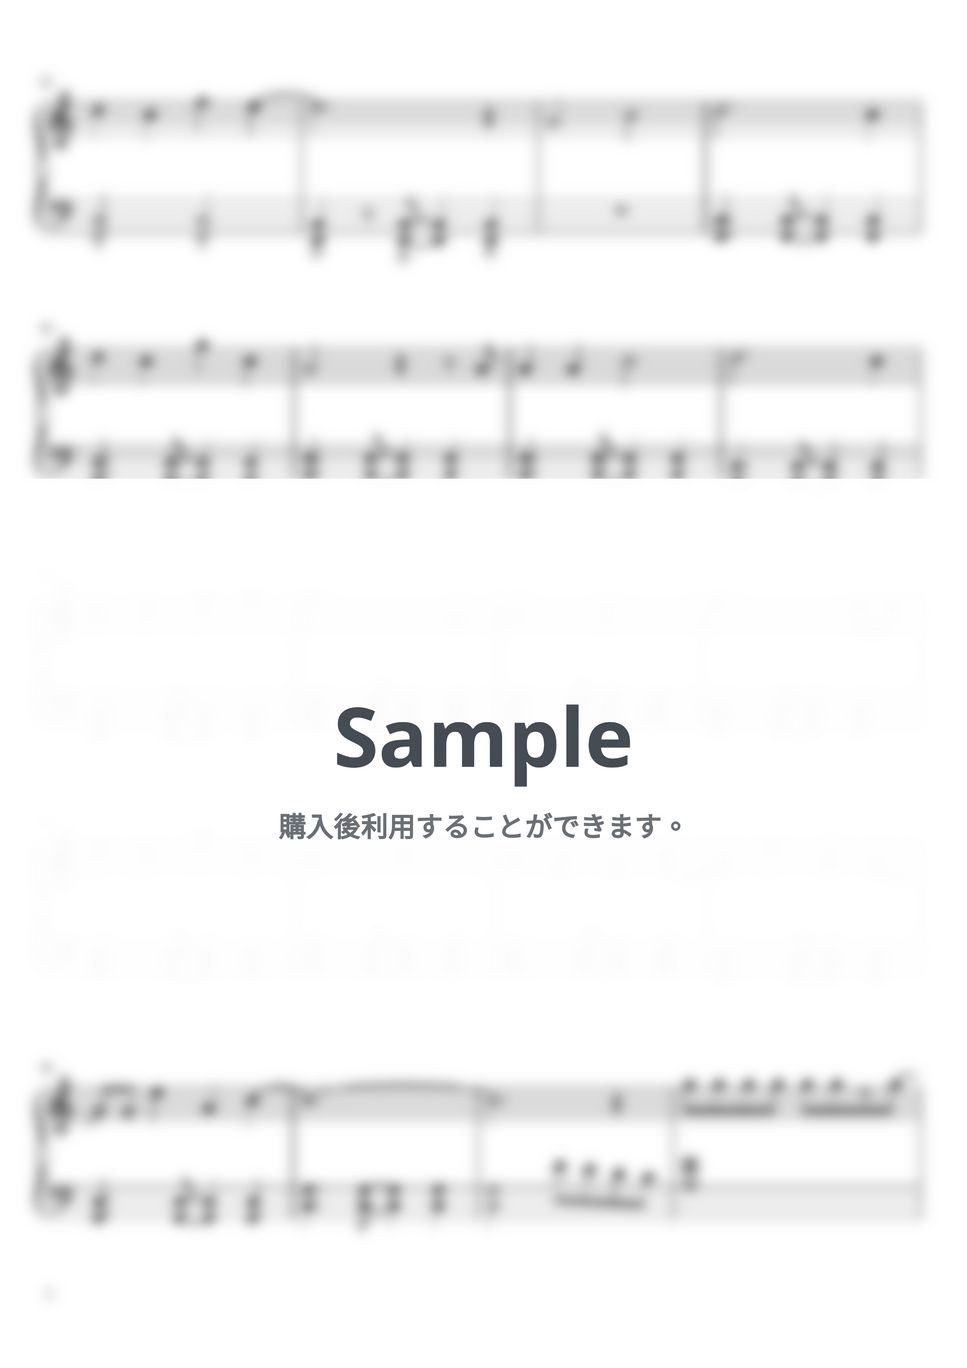 Vaundy - 裸の勇者 (王様ランキング / ピアノ楽譜 / 初級) by Piano Lovers. jp